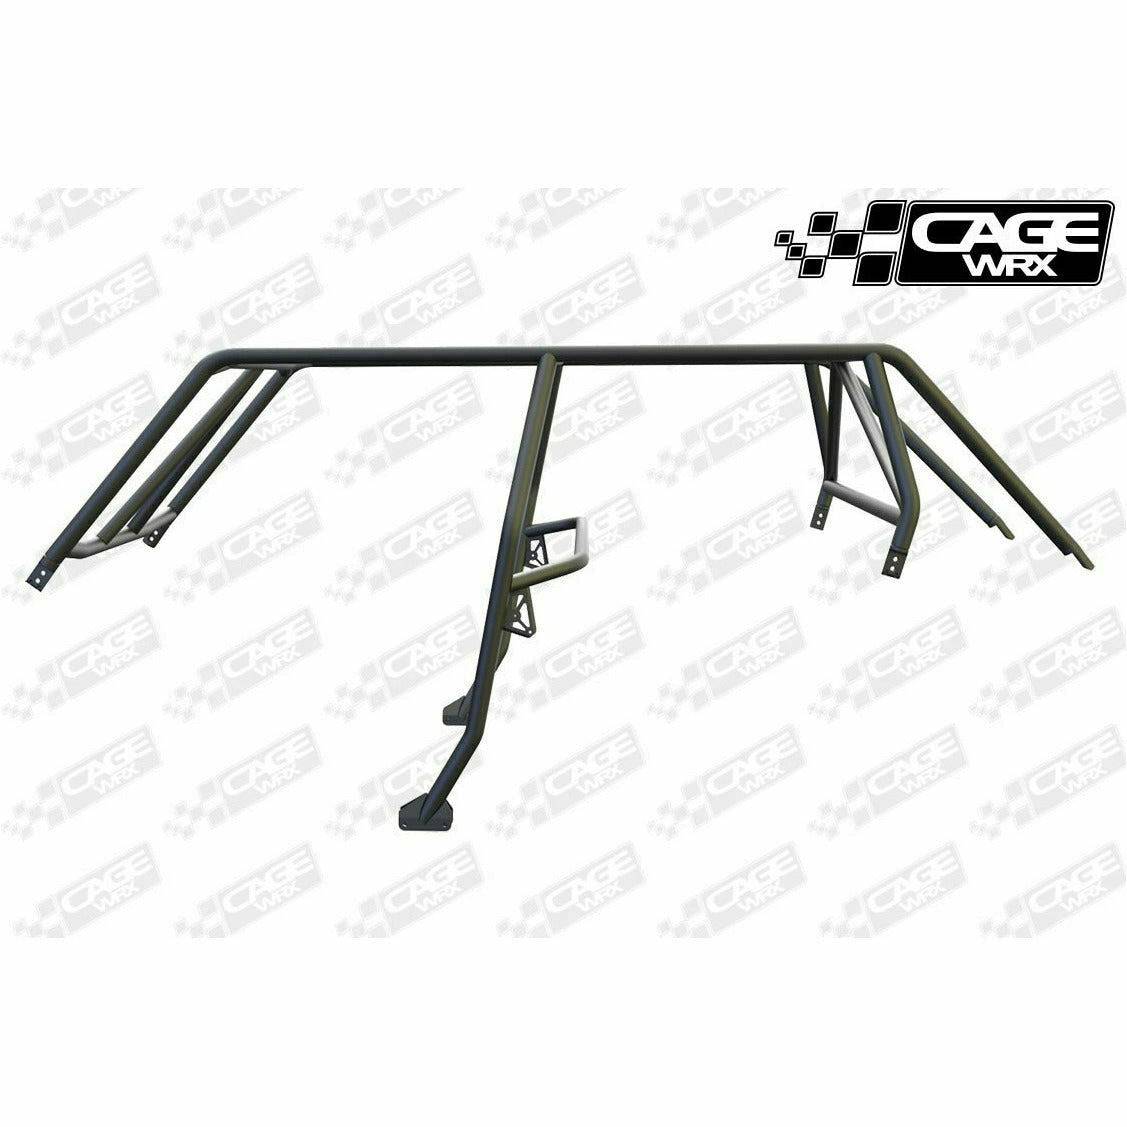 CageWRX Polaris RZR XP 1000/Turbo (2014-2018) "BAJA SPEC" 4-Door Unassembled Cage Kit (Raw)